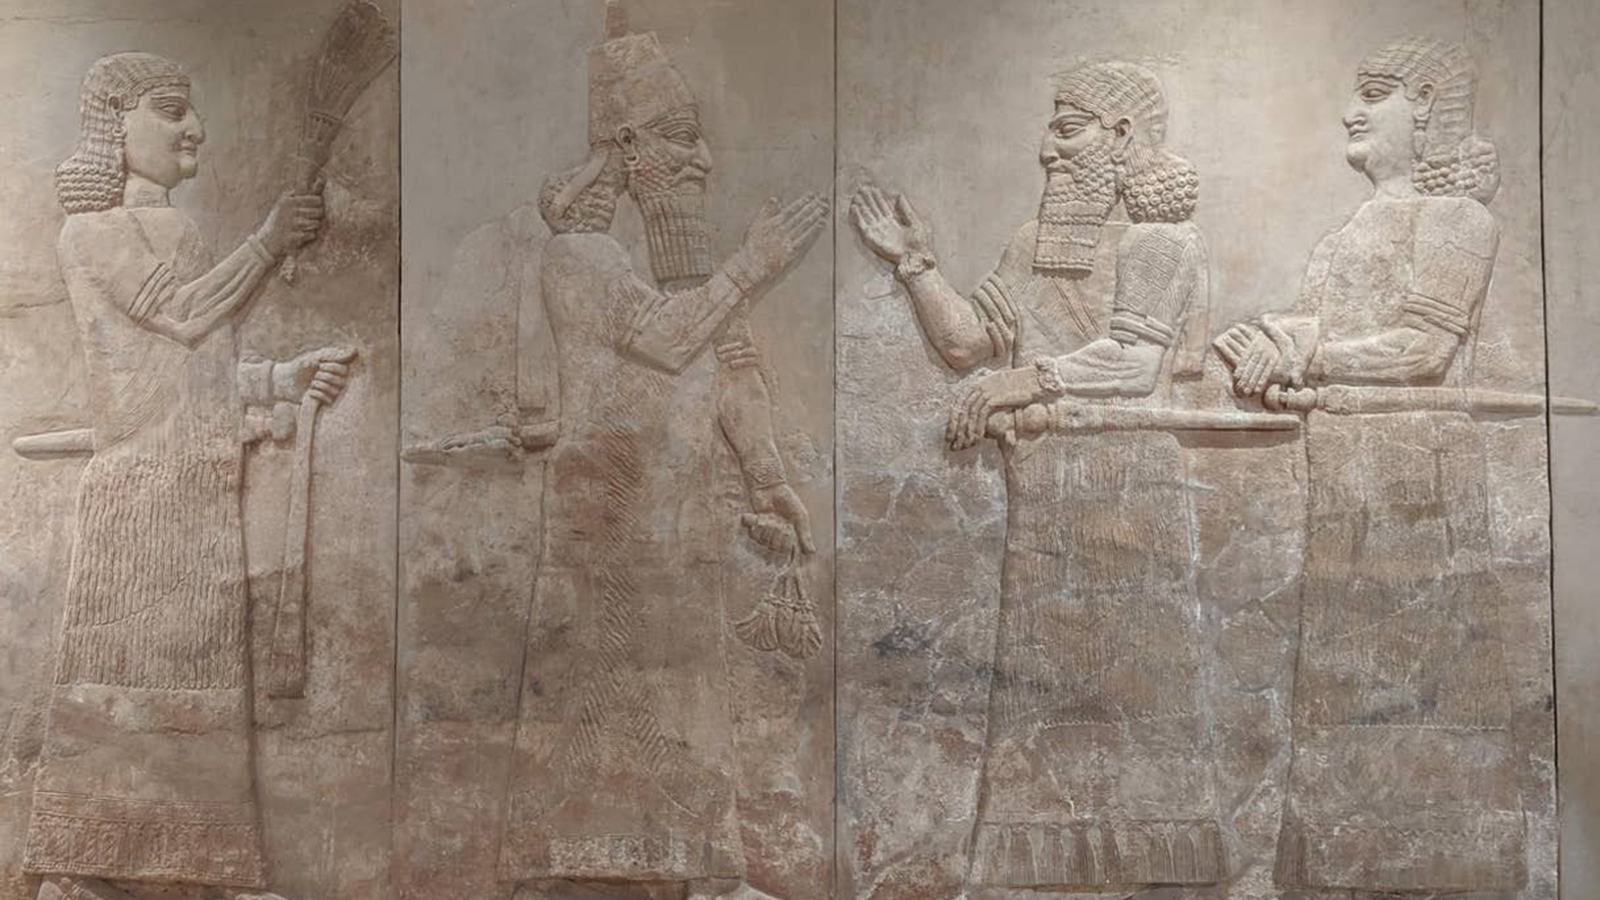 U.S. to return 3,500-year-old Gilgamesh tablet to Iraq